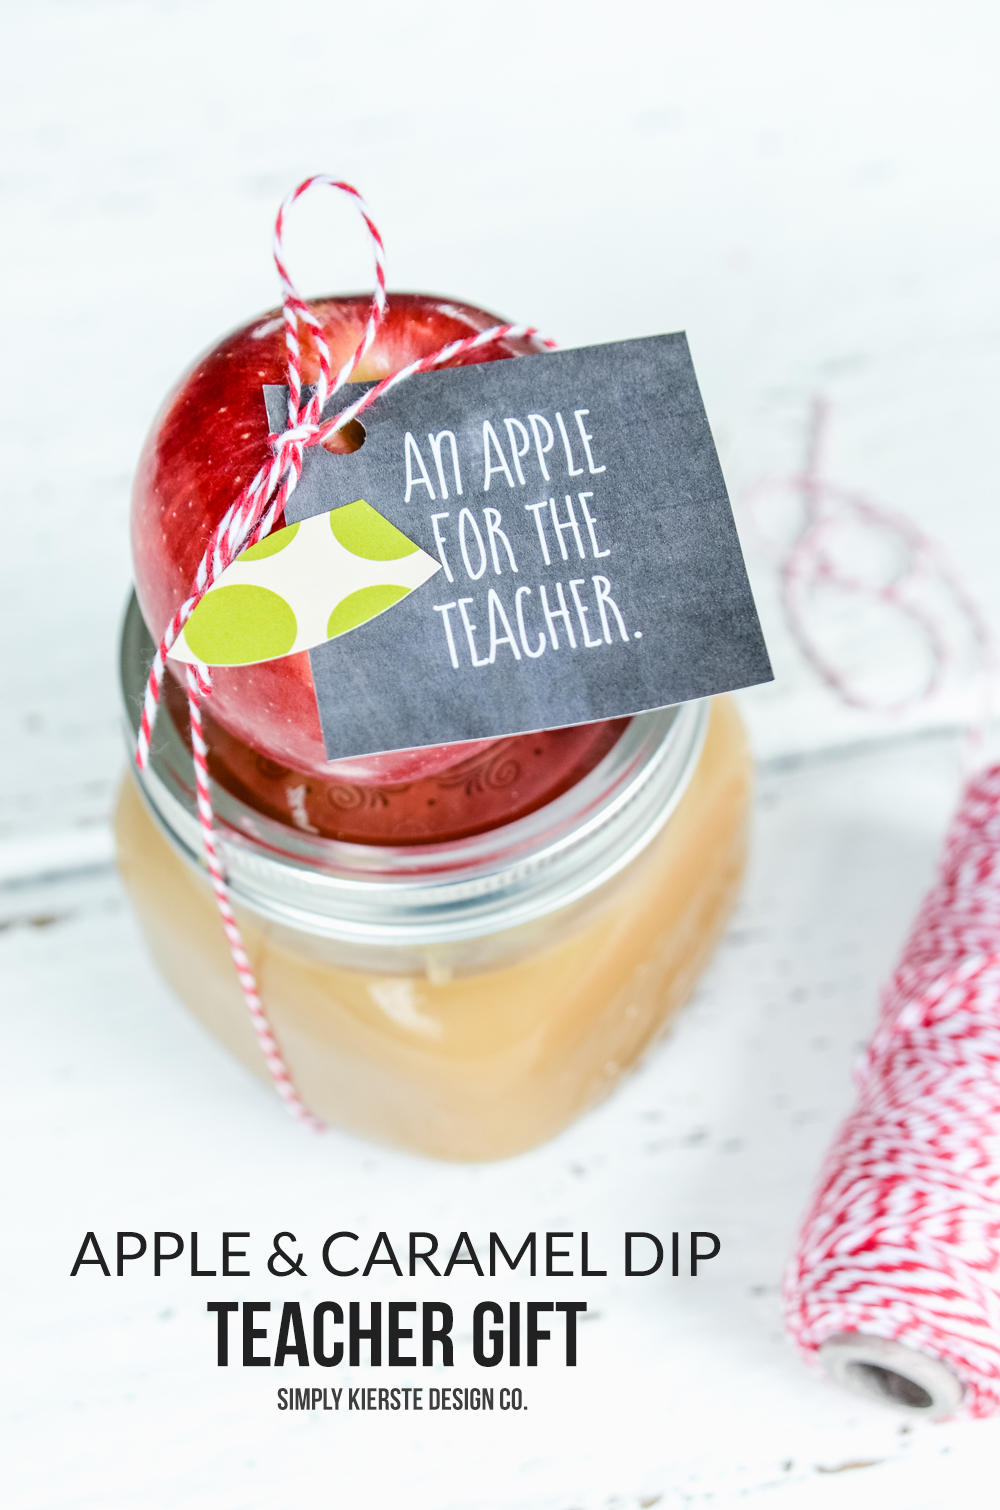 Apple Caramel Dip Teacher Gift | oldsaltfarm.com